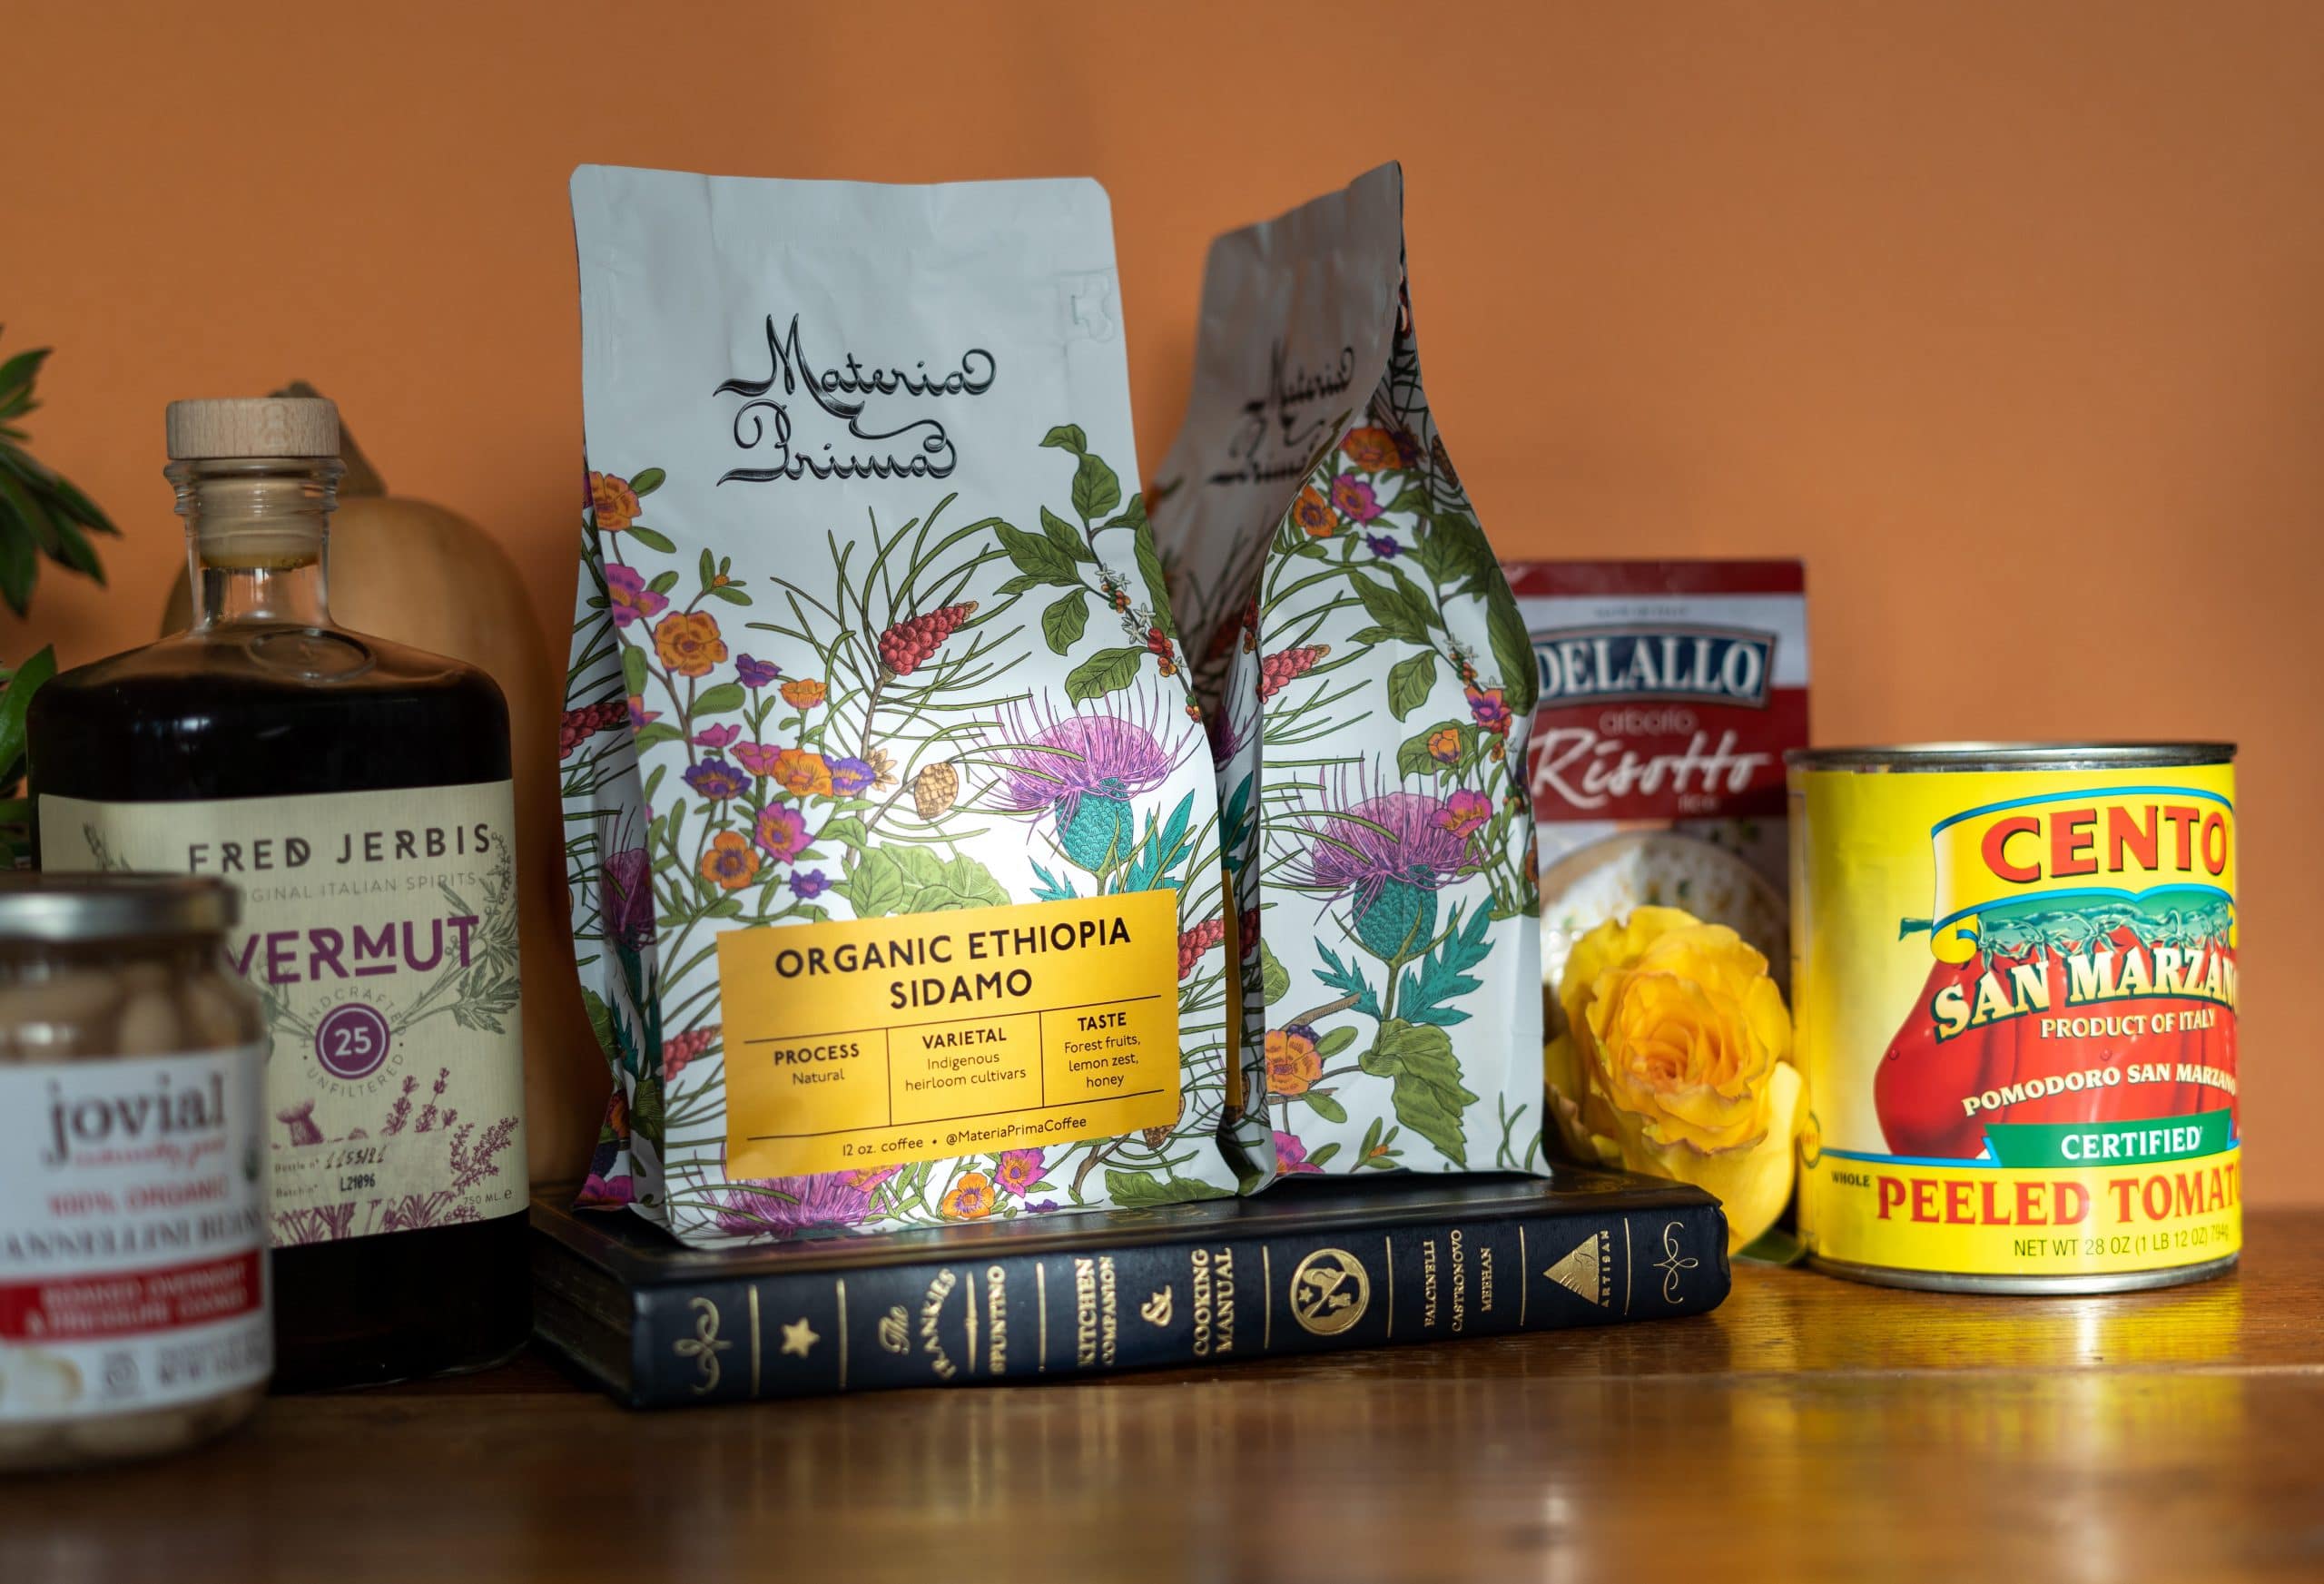 Materia Prima coffee bags among Italian brands